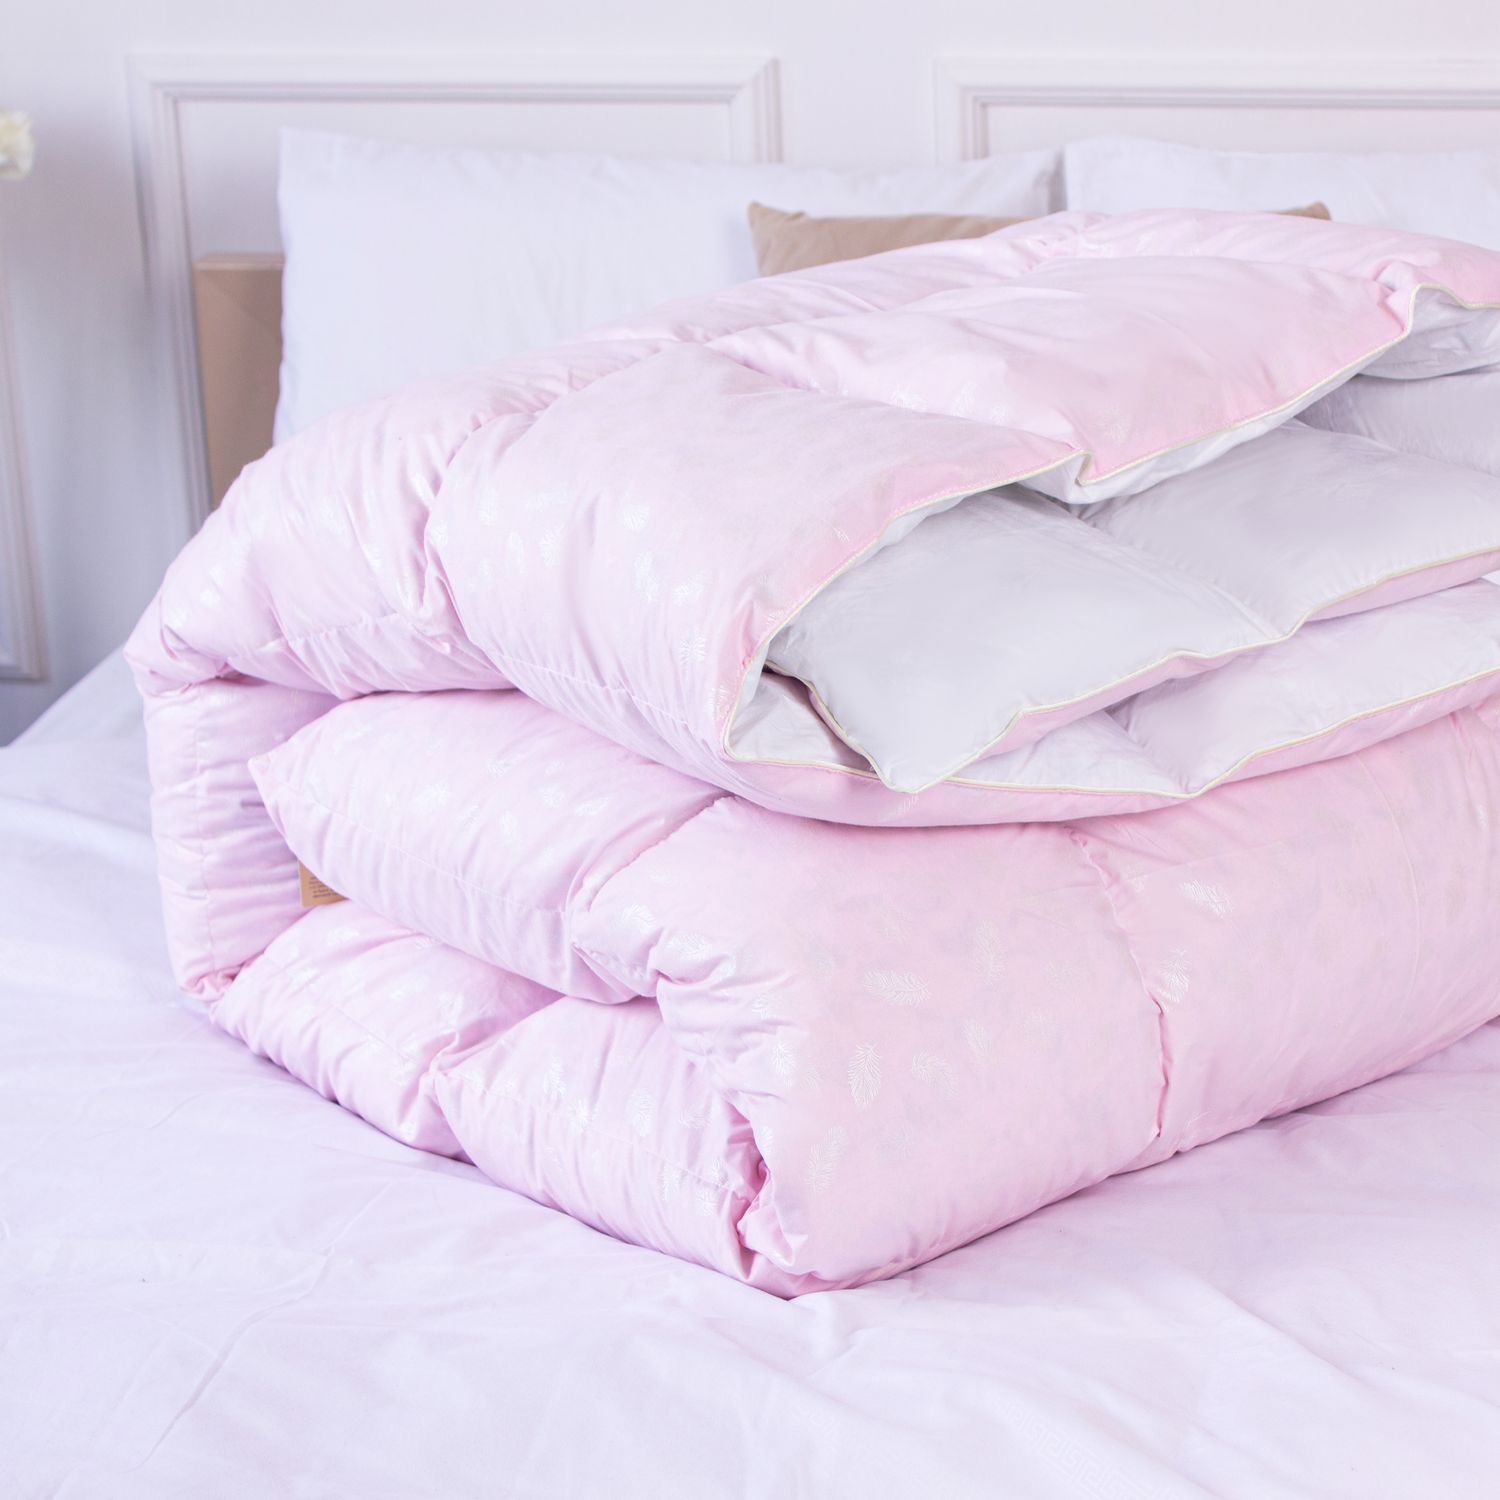 Одеяло пуховое MirSon Karmen №1832 Bio-Pink, 70% пух, полуторное, 215x155, розовое (2200003013108) - фото 3